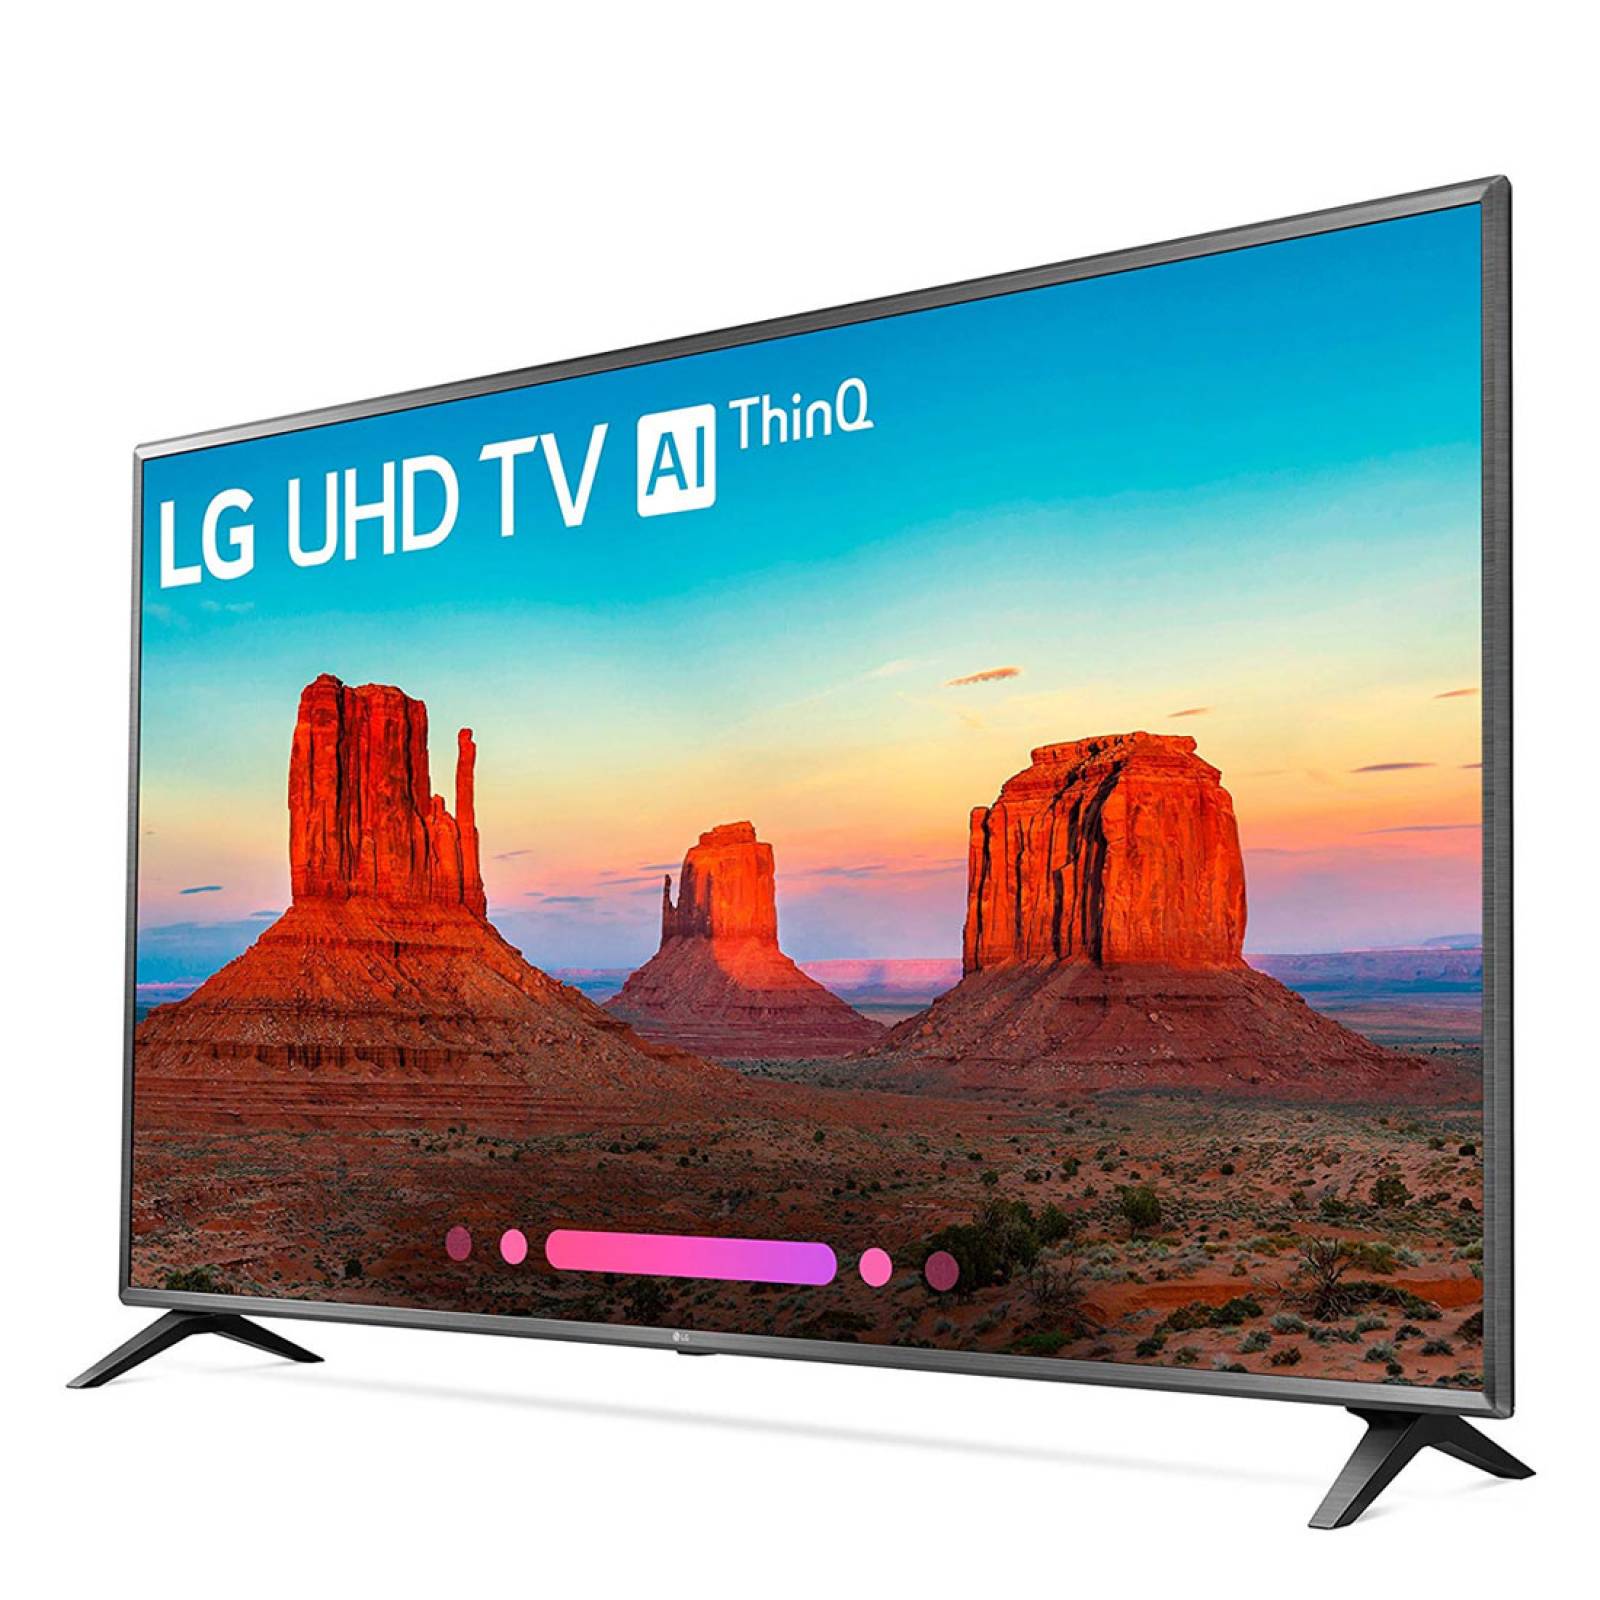 TV LG 75 LED 4K 3840 X 2160P SMART TV FULL BLUETOOTH Y RECONOCIMIENTO DE VOZ